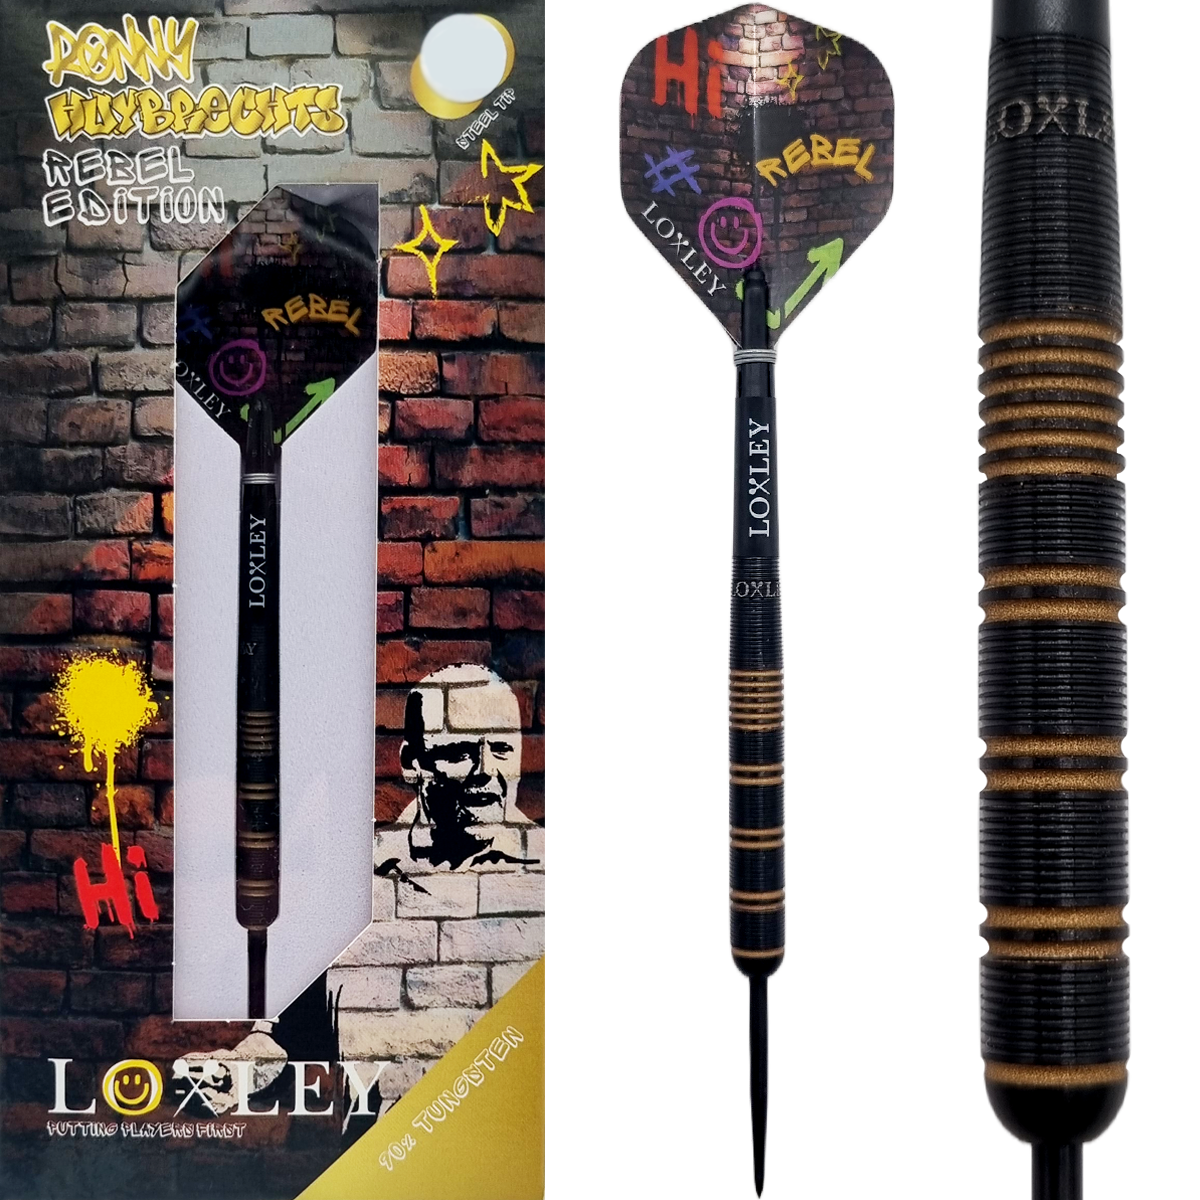 RONNY HUYBRECHTS Rebel edition darts